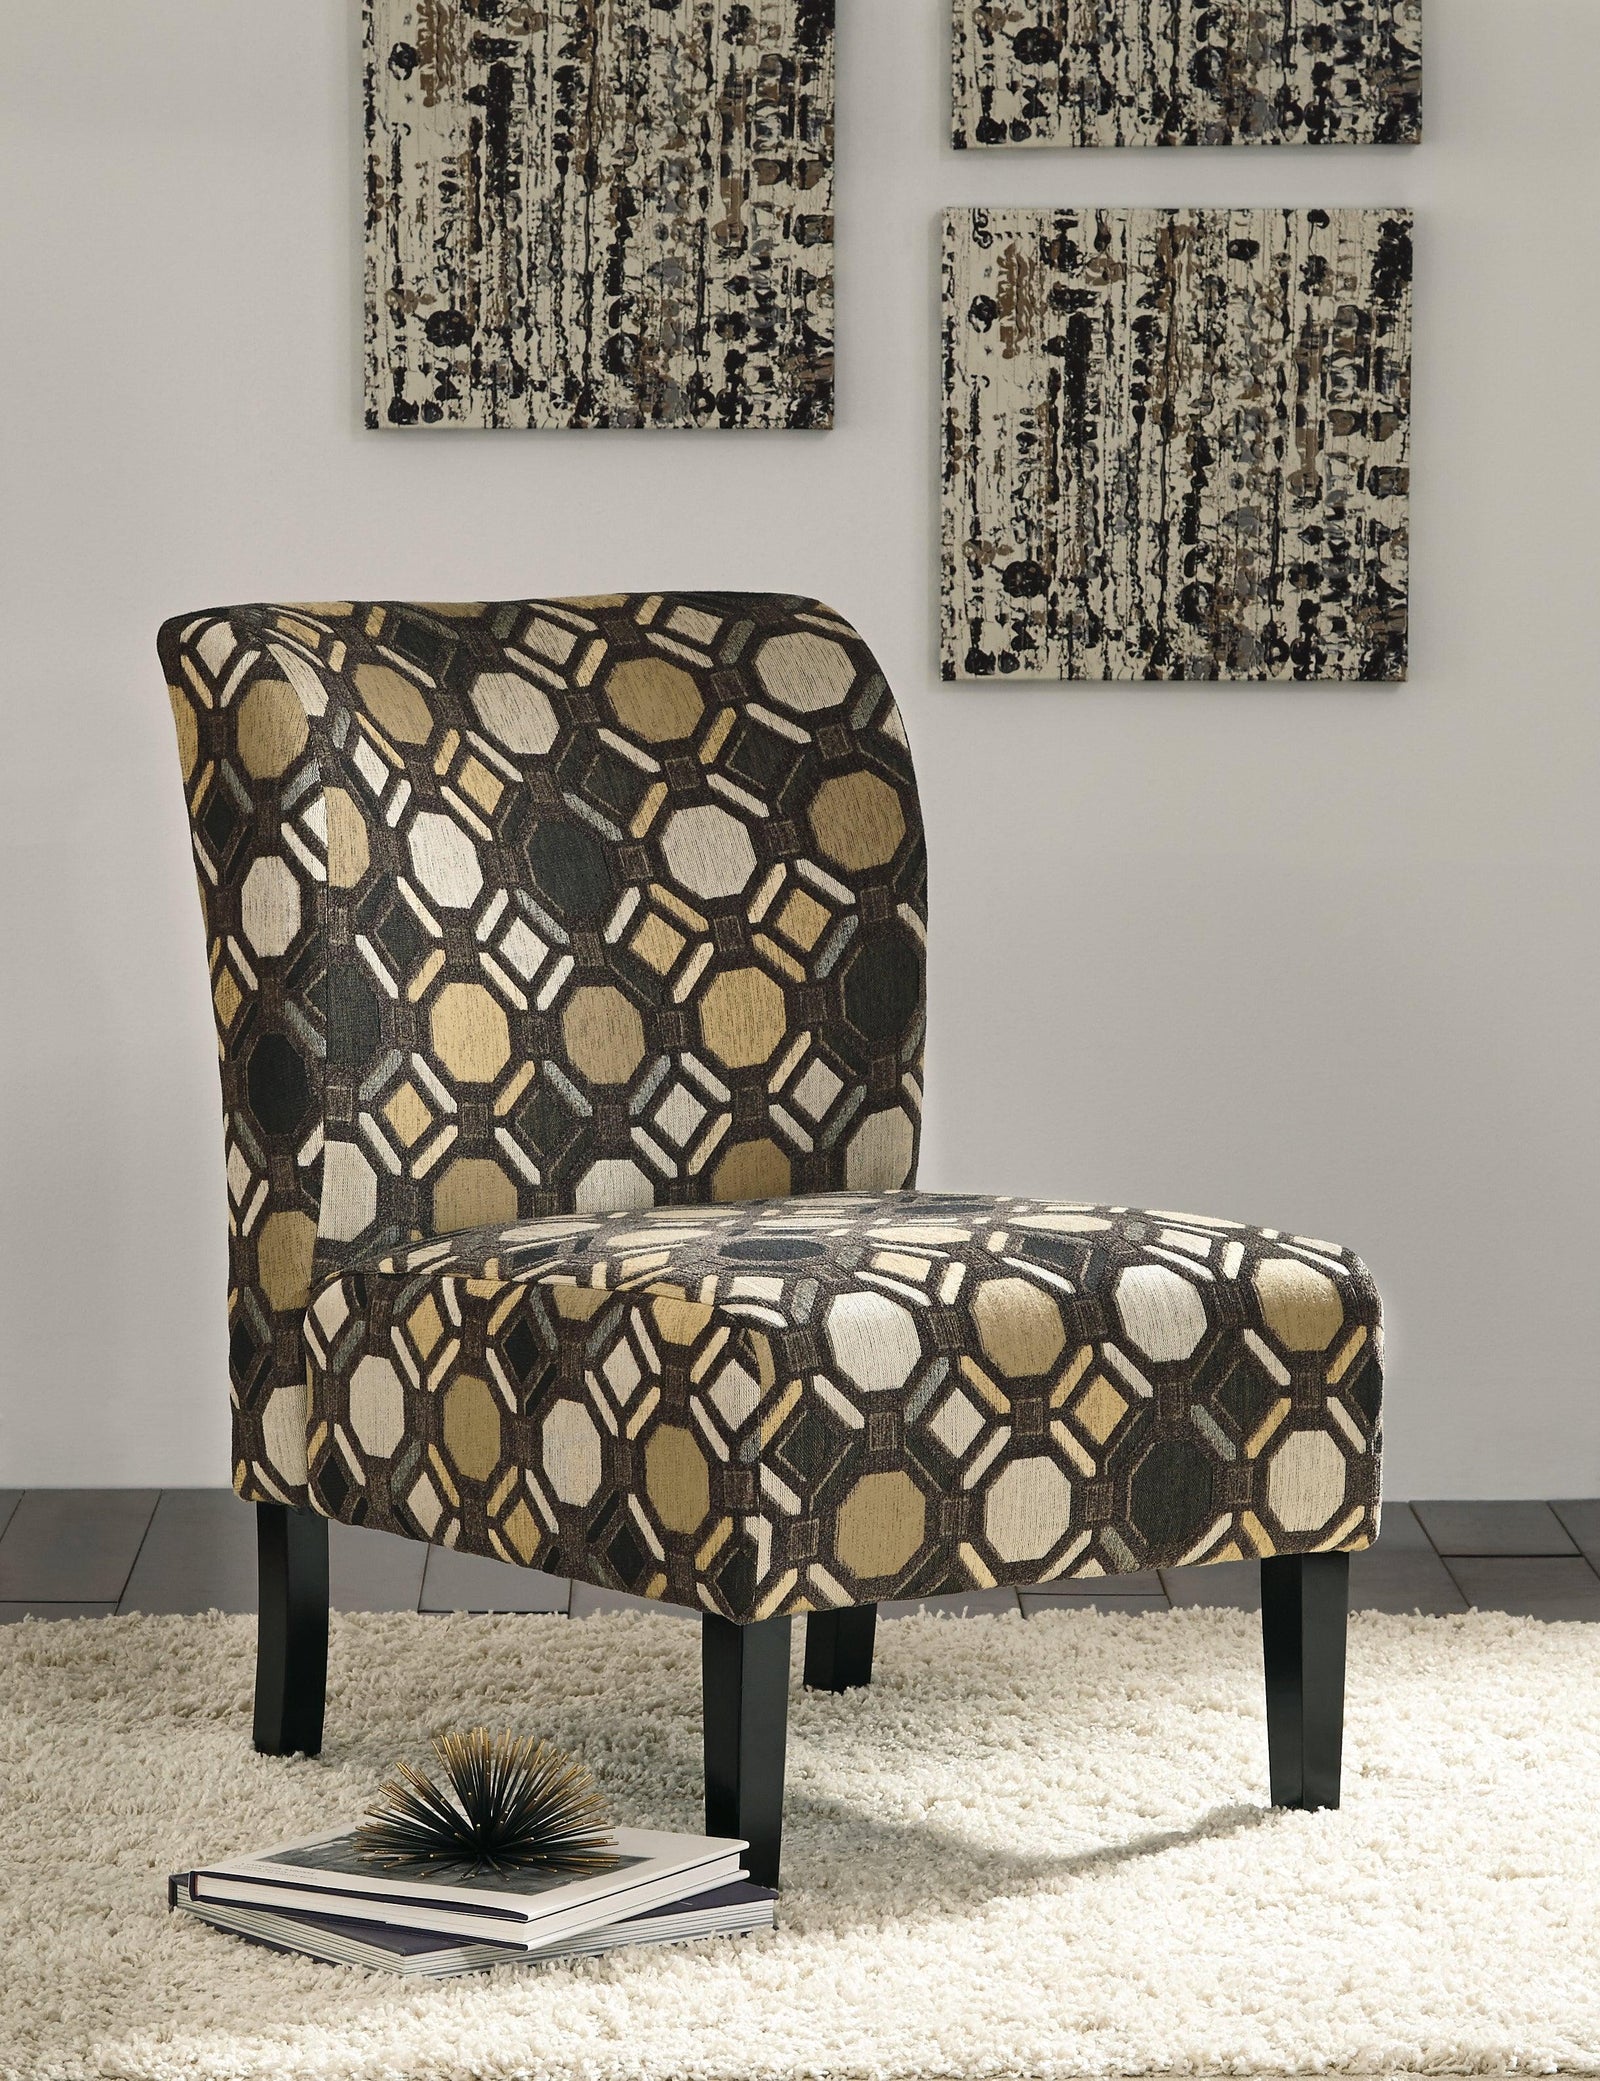 Tibbee Slate Sofa, Loveseat And Chair - Ella Furniture